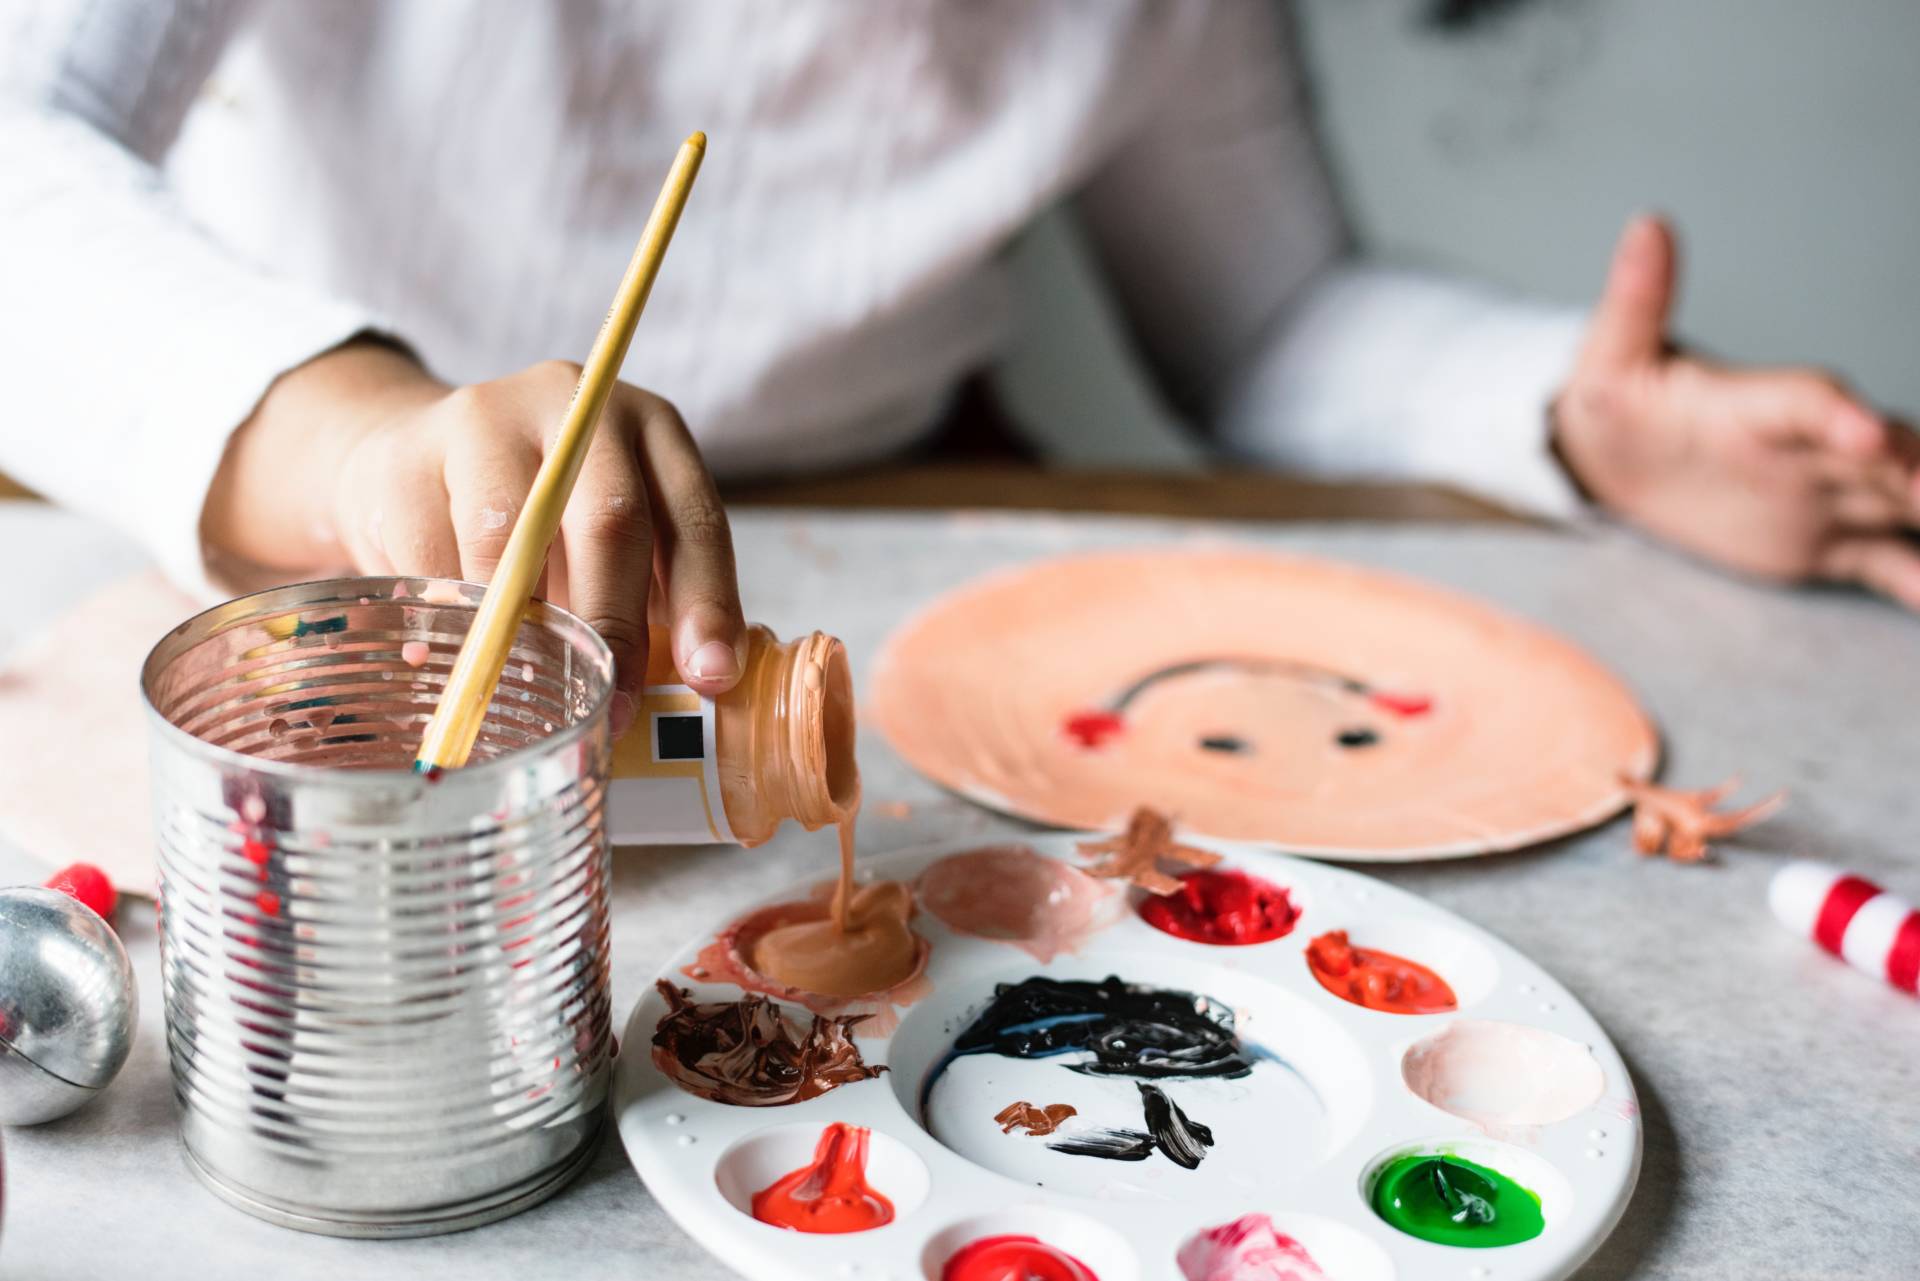 child's hand pouring paint into a paint palette